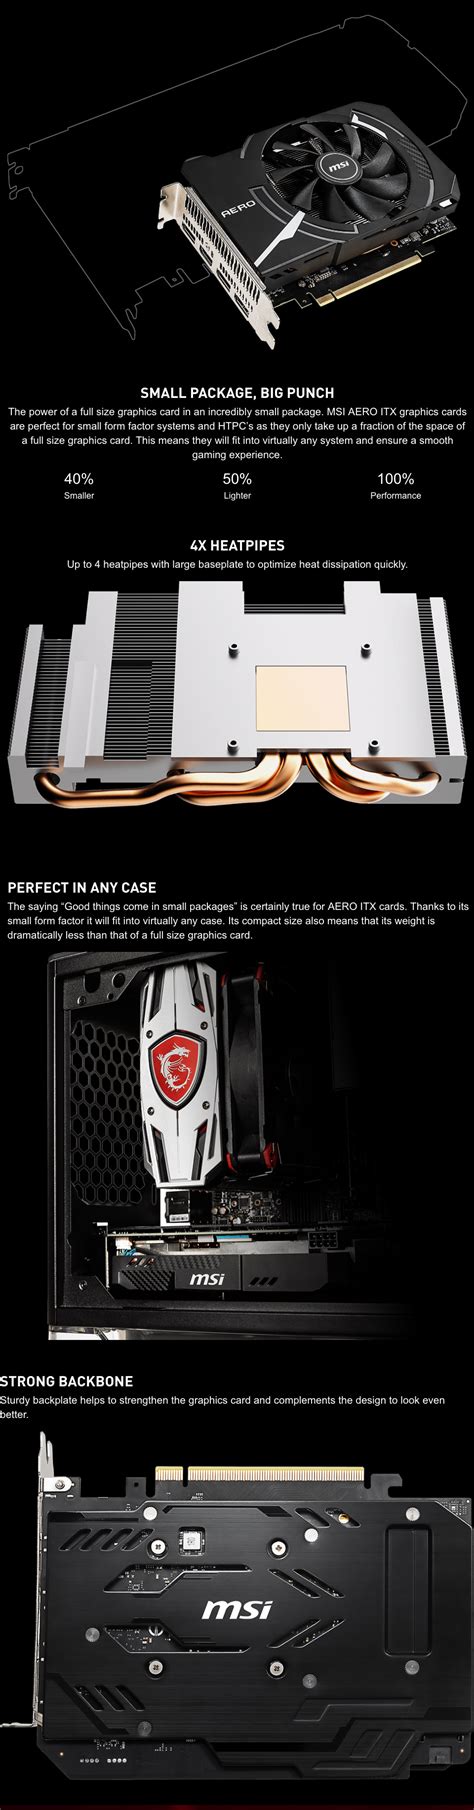 Buy Msi Geforce Rtx 2060 Super Aero Itx 8g Rtx2060 Super Aero Itx